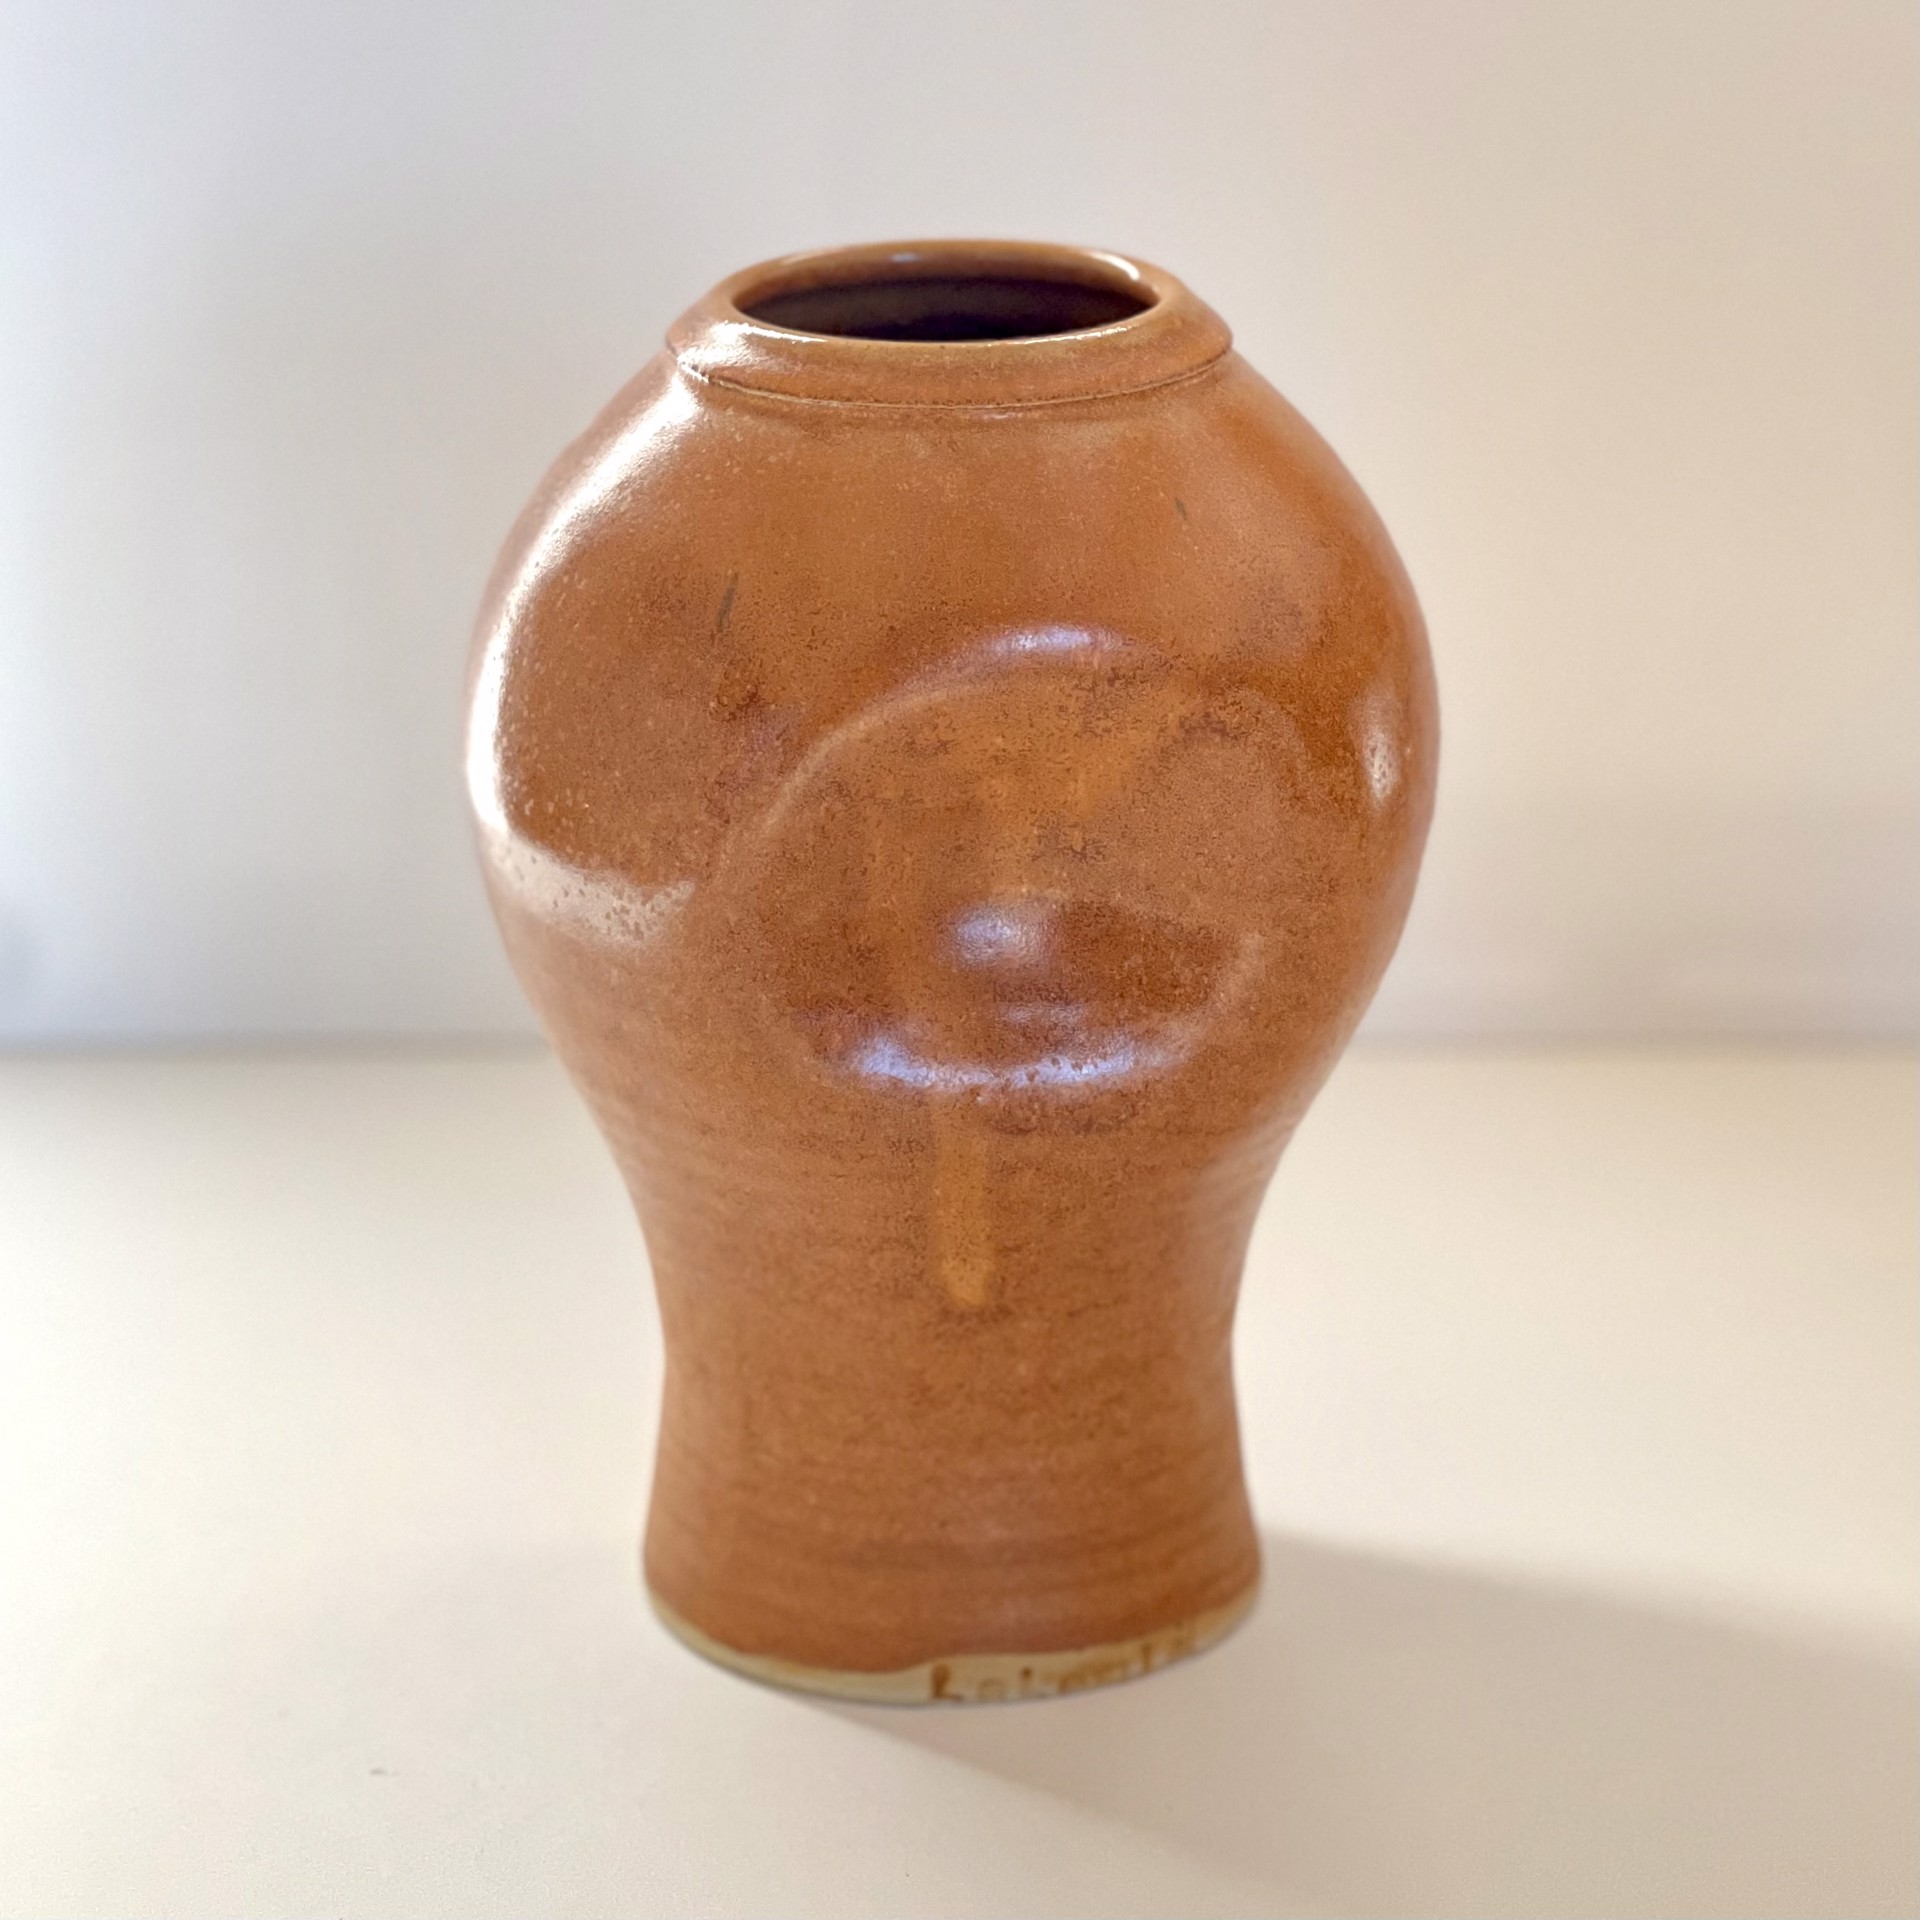 Vase 6 by David LaLomia